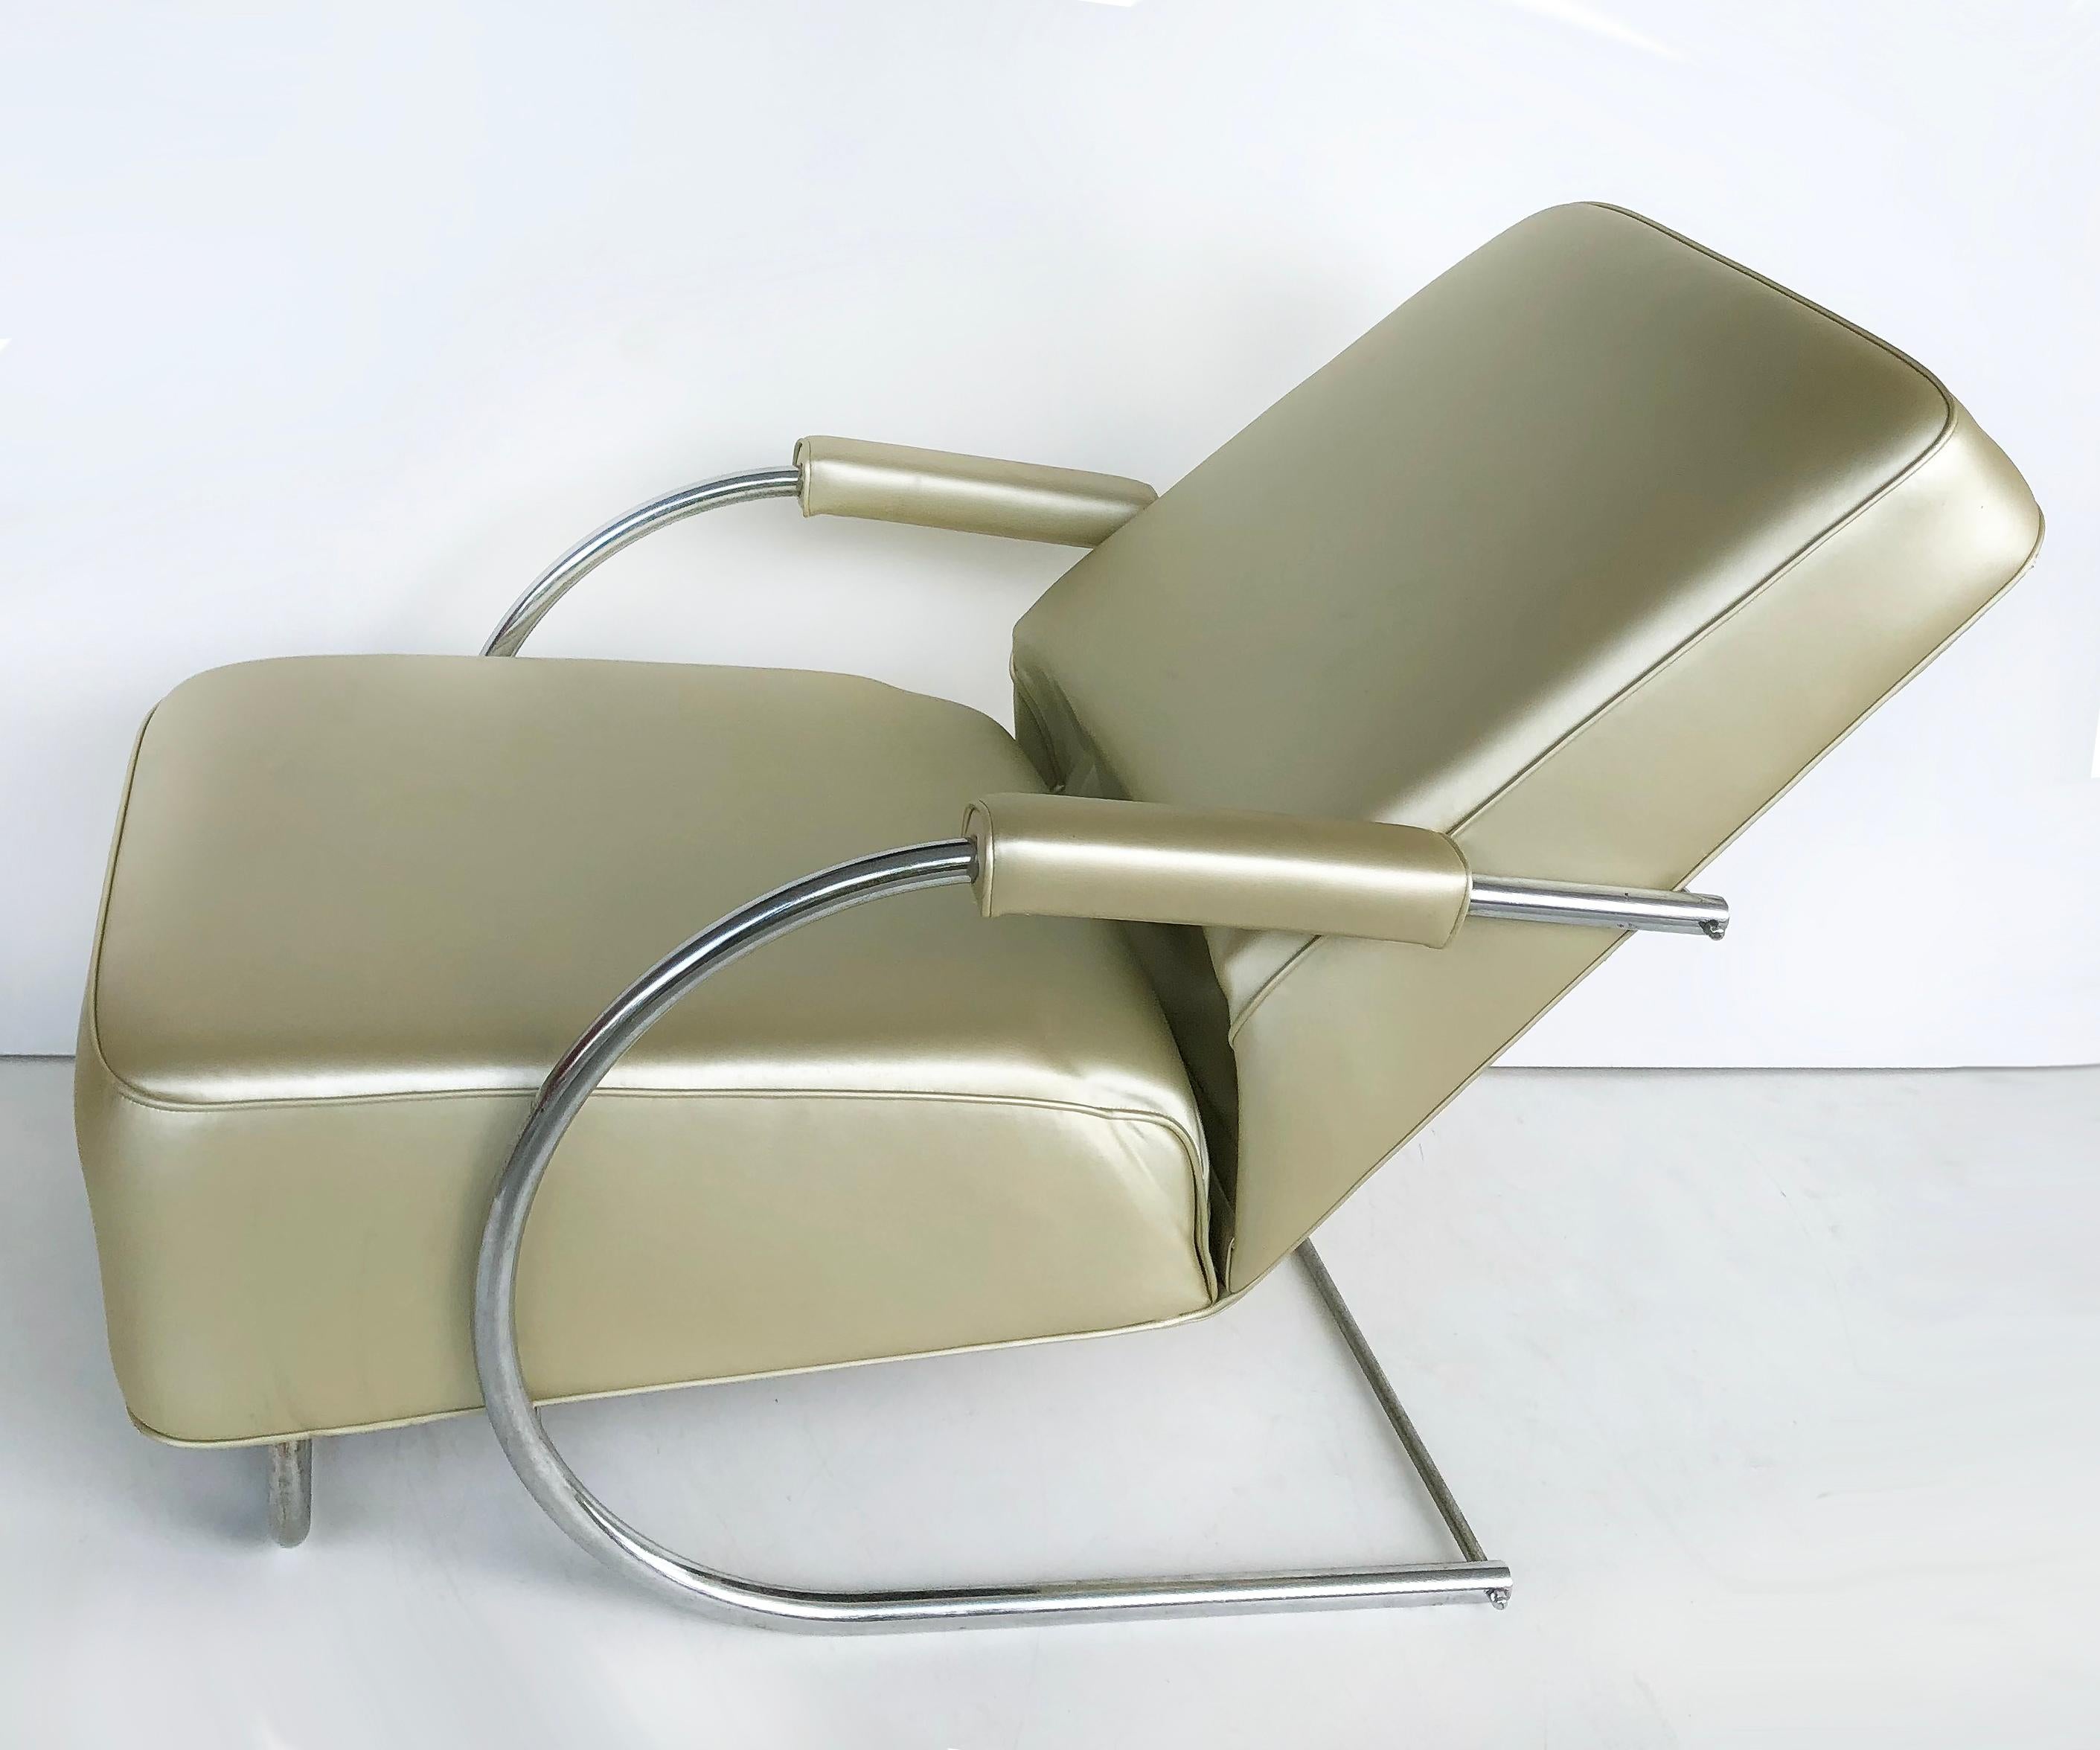 Art Deco Streamline Moderne Chairs by Kem Weber, Attributed  1